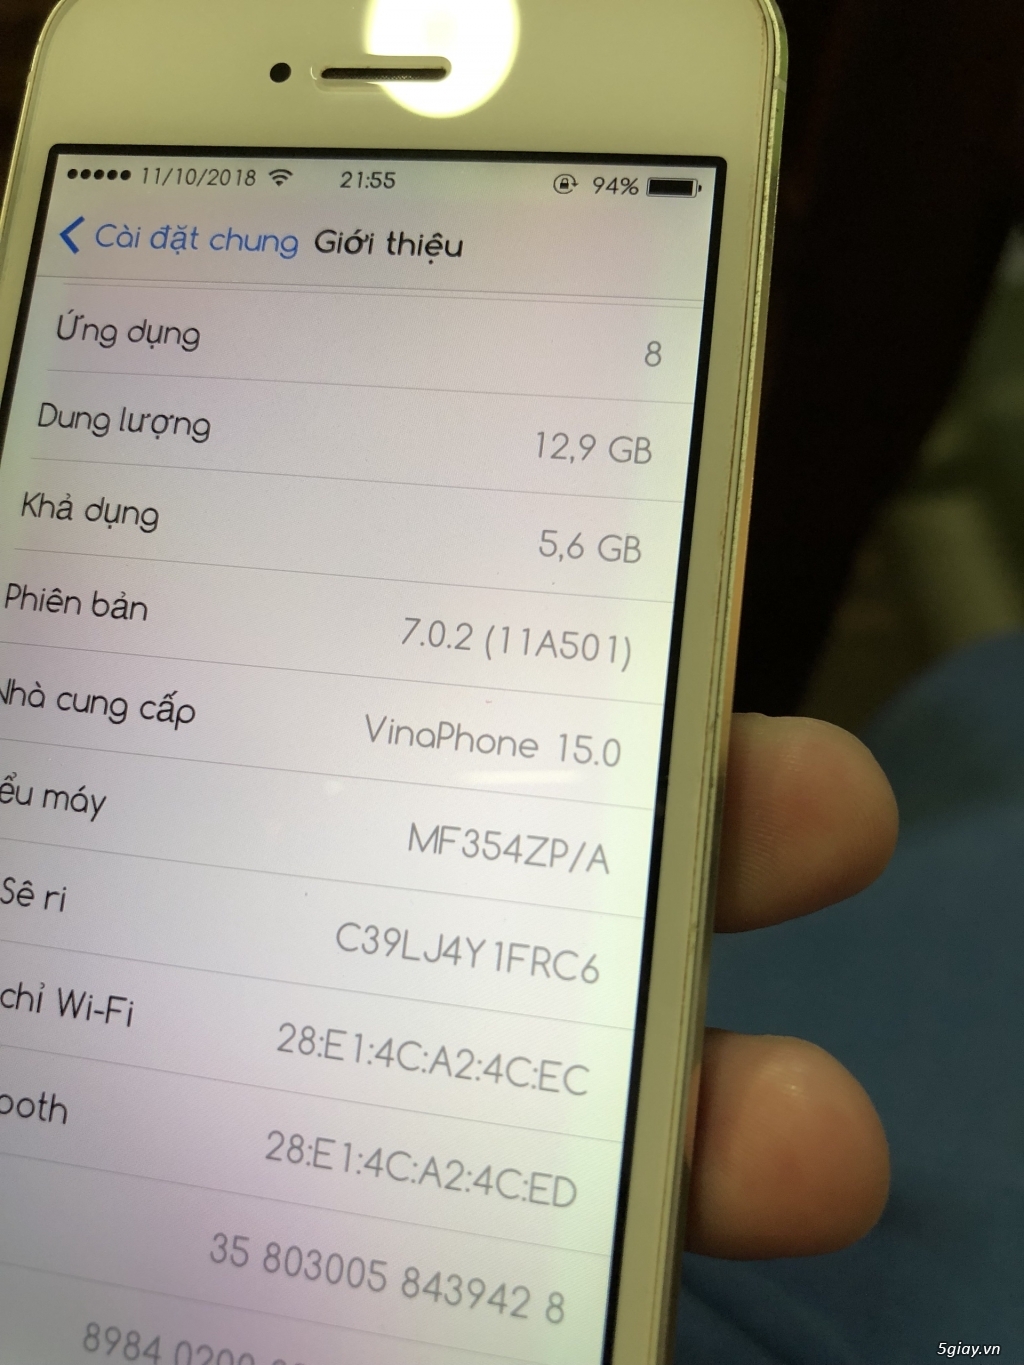 iphone 5s gold quốc tế fullbox ios 7.0.3 hang suu tam likenew 97% - 4